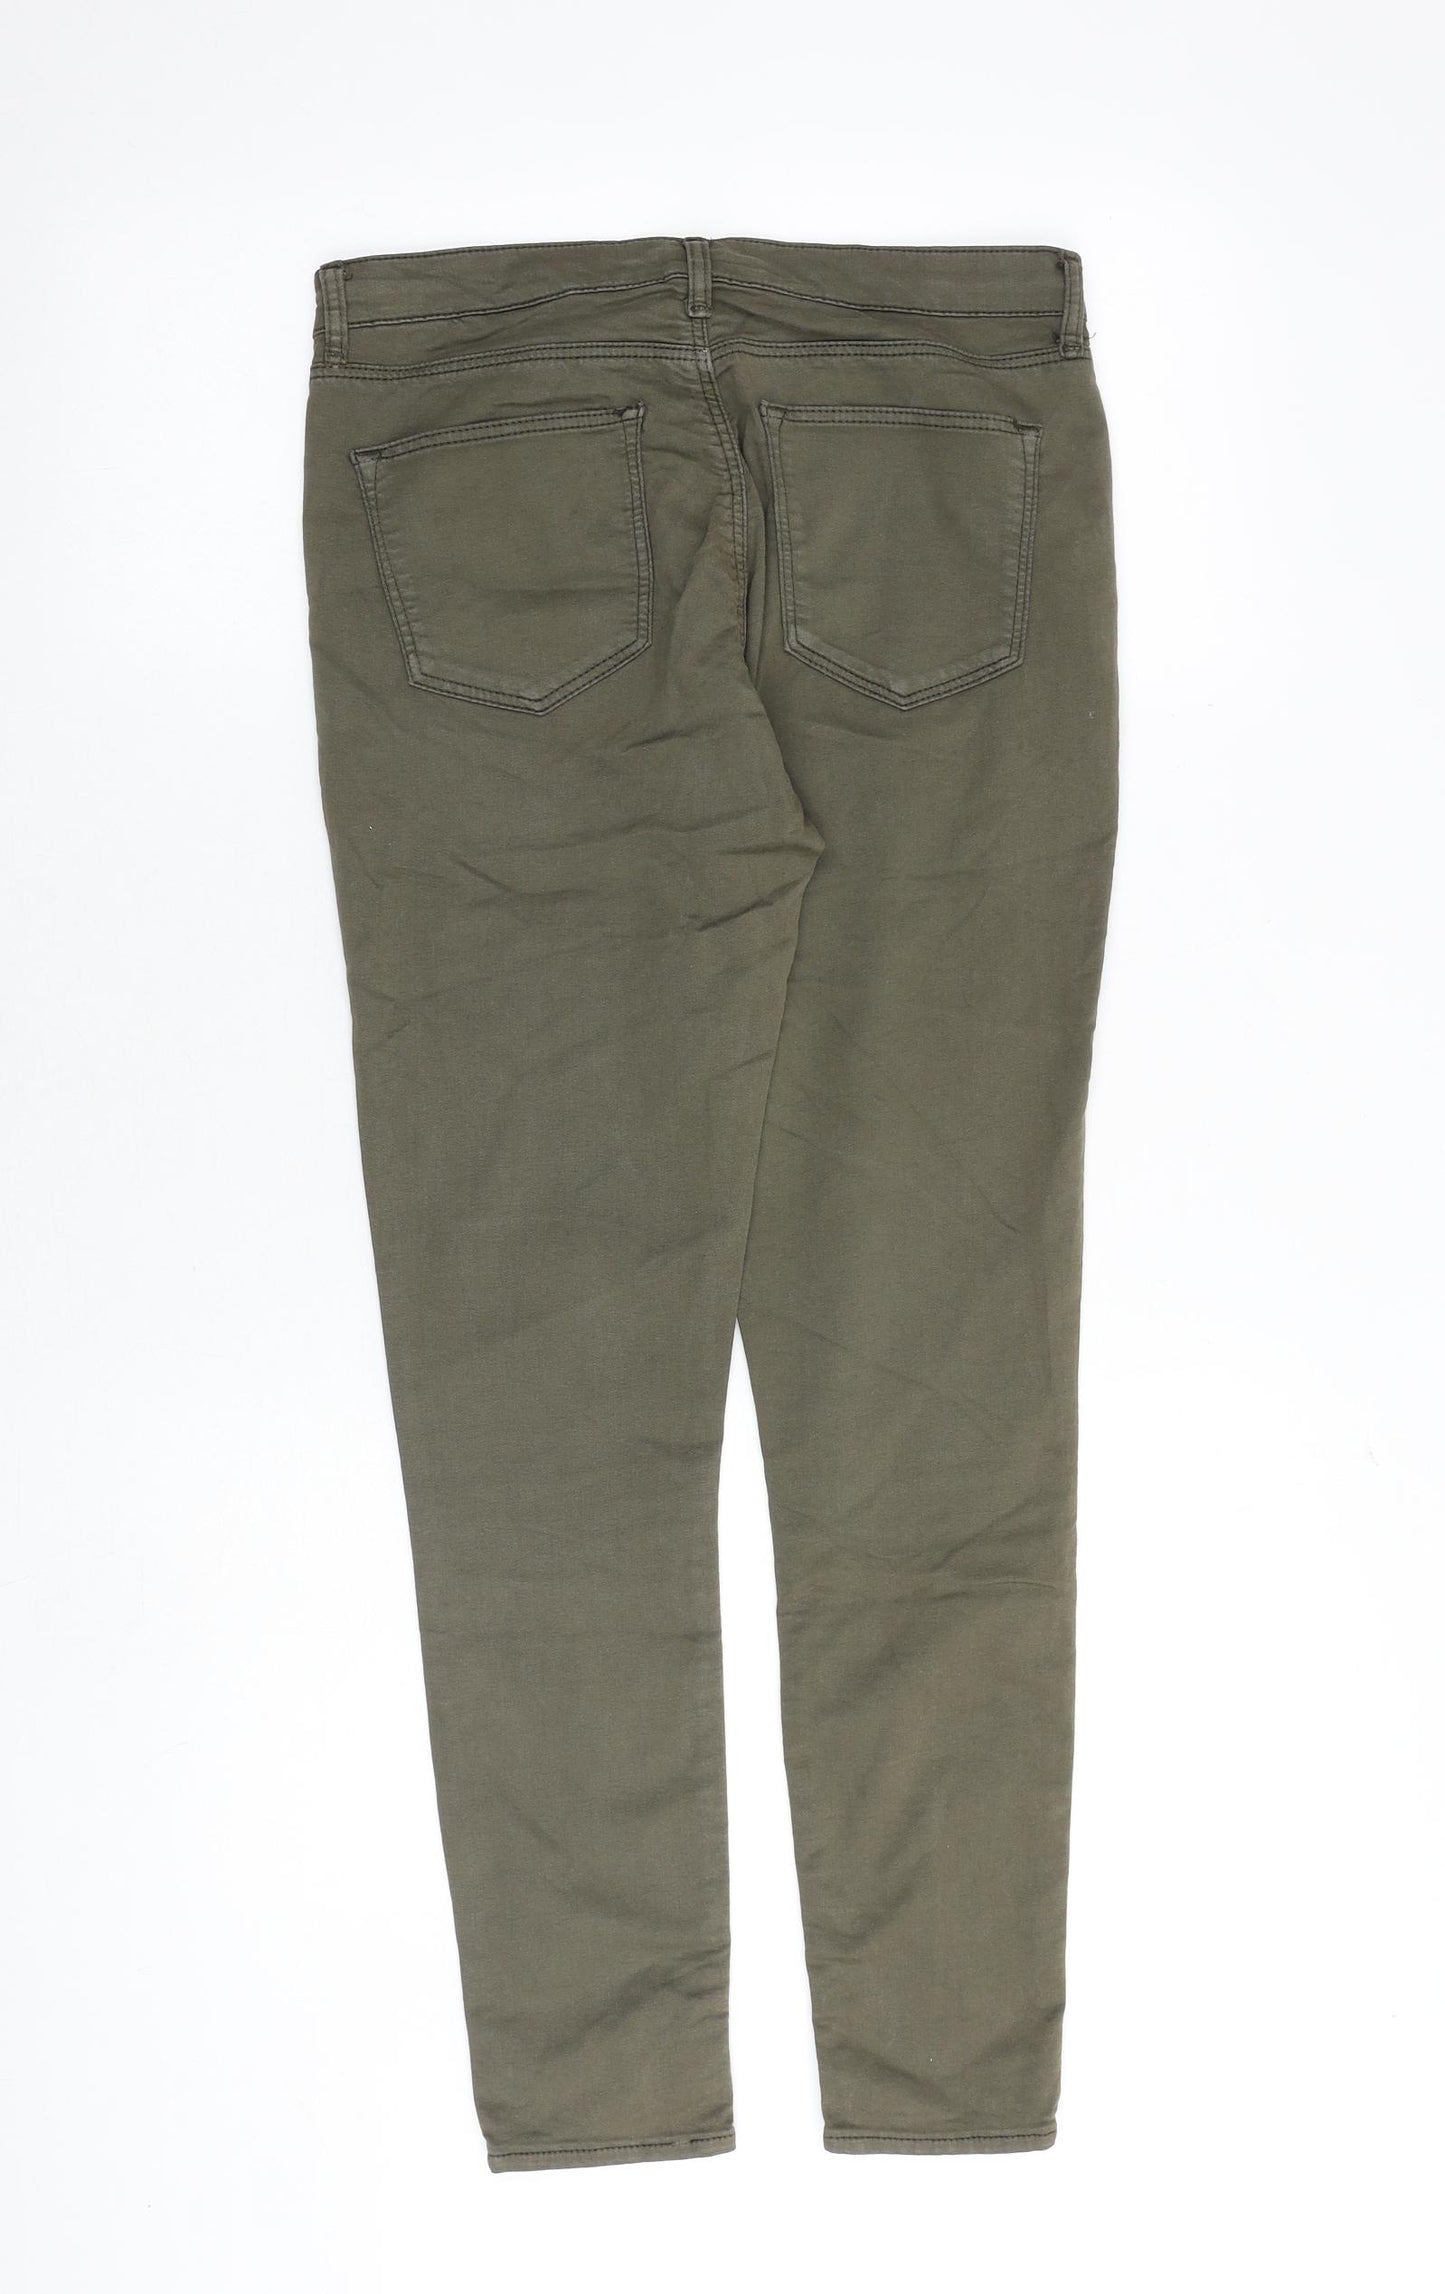 Topshop Womens Green Cotton Skinny Jeans Size 30 in L32 in Regular Zip